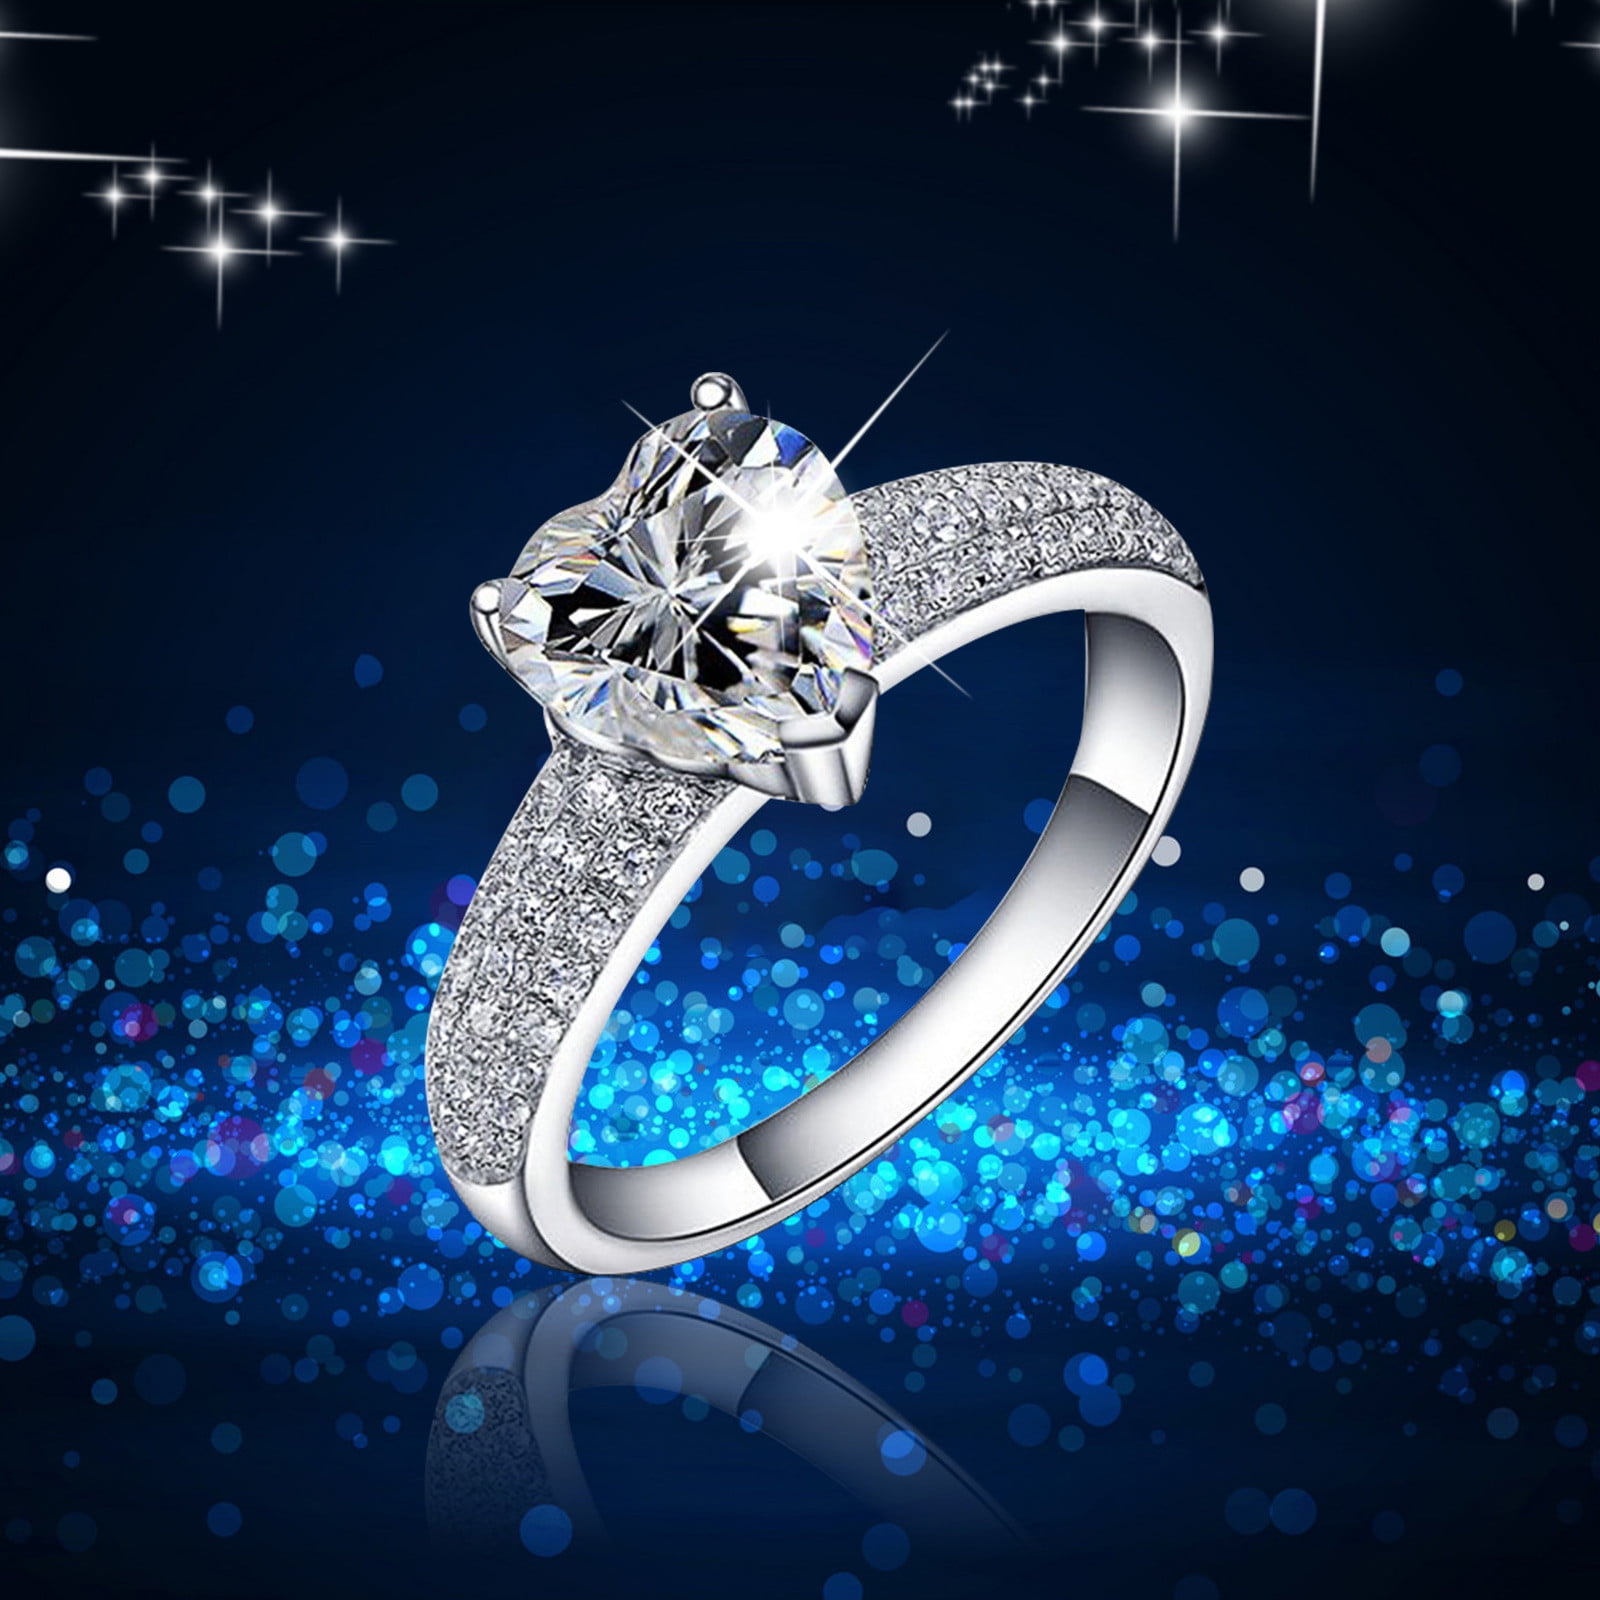 18k Gold Double cut Diamond Couple Ring, 18k Gold full cut Diamond Ring,  Couple Diamond Ring, Engagement Ring, 18k Handmade Jewelry – Thesellerworld